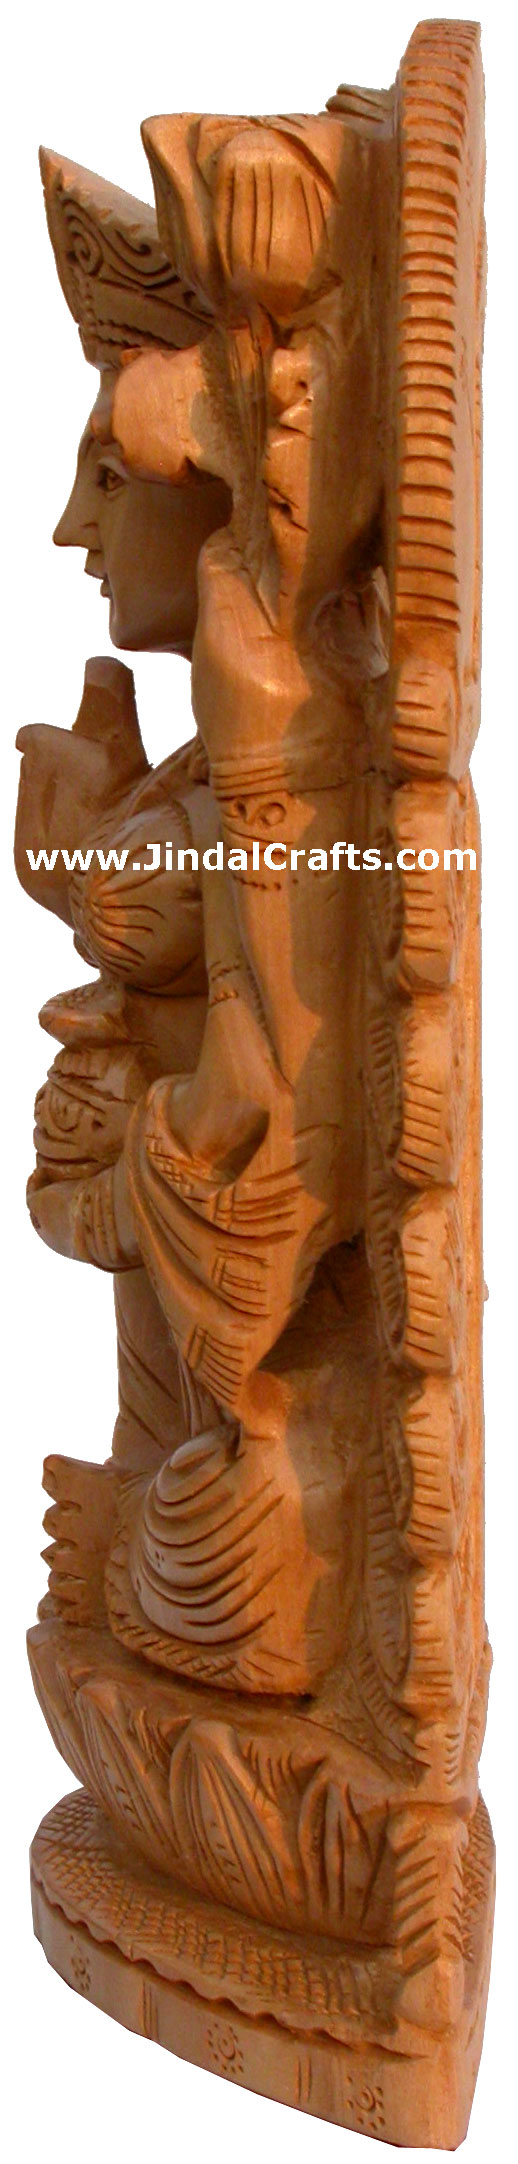 Lakshmi Hand Carving India Religious Sculptures Crafts